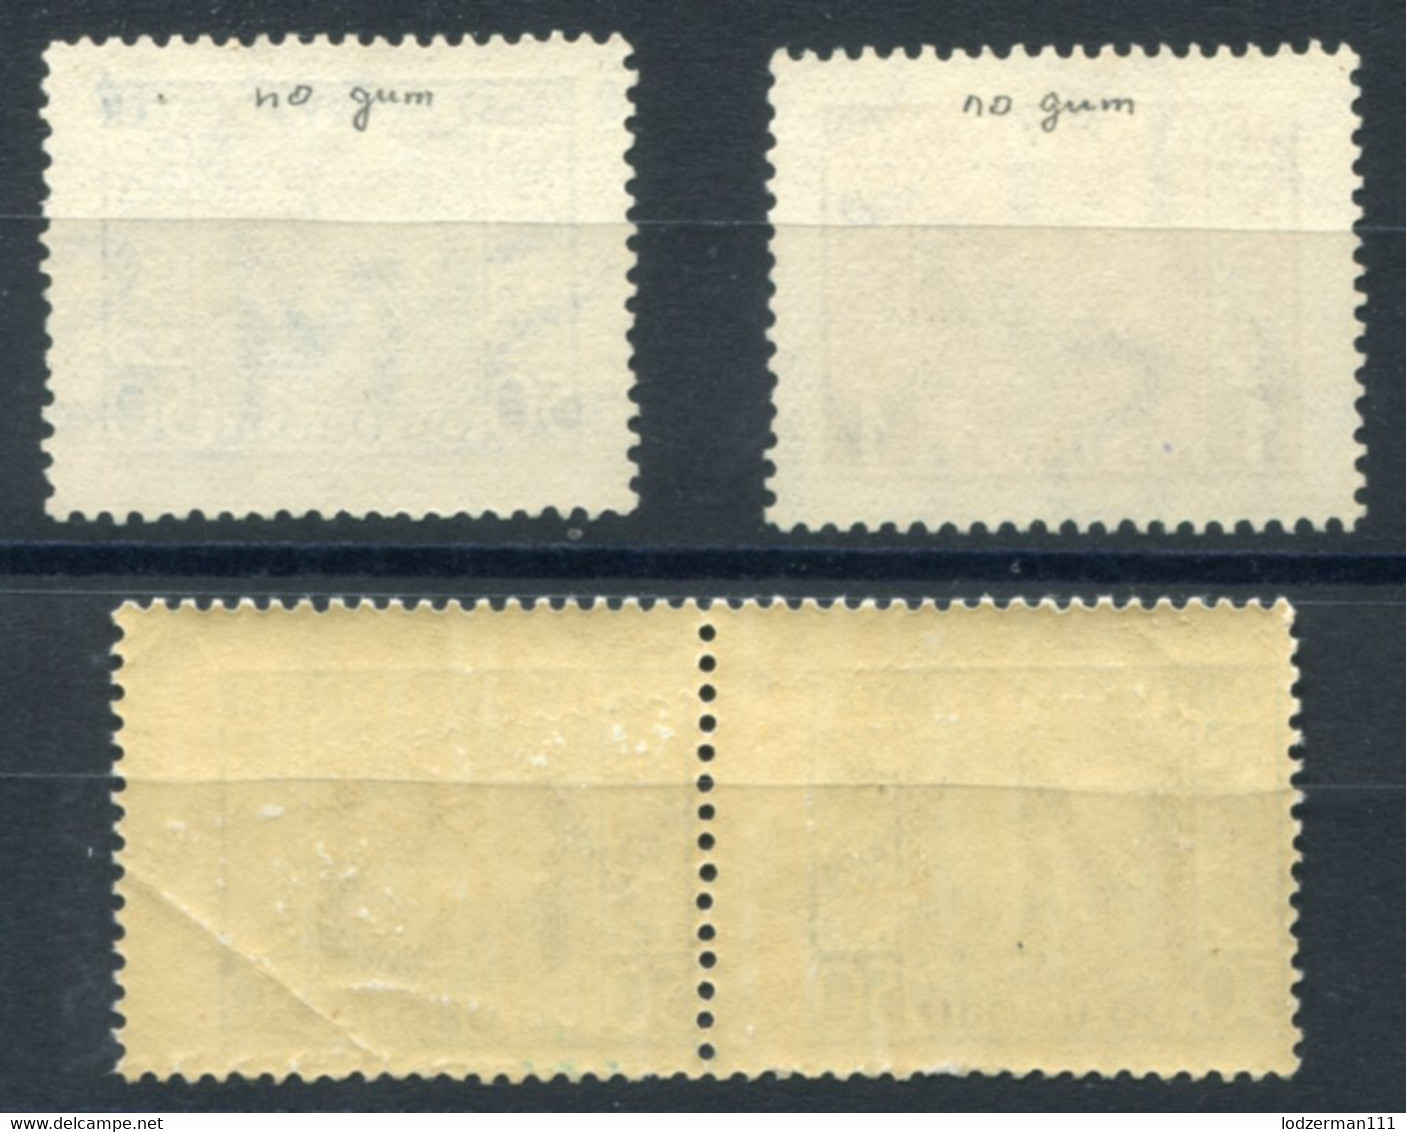 1937 Abattoir Tax (OD UBOJU) - 2 MNG Stamps And Pair (MNH) Rare - Fiscali